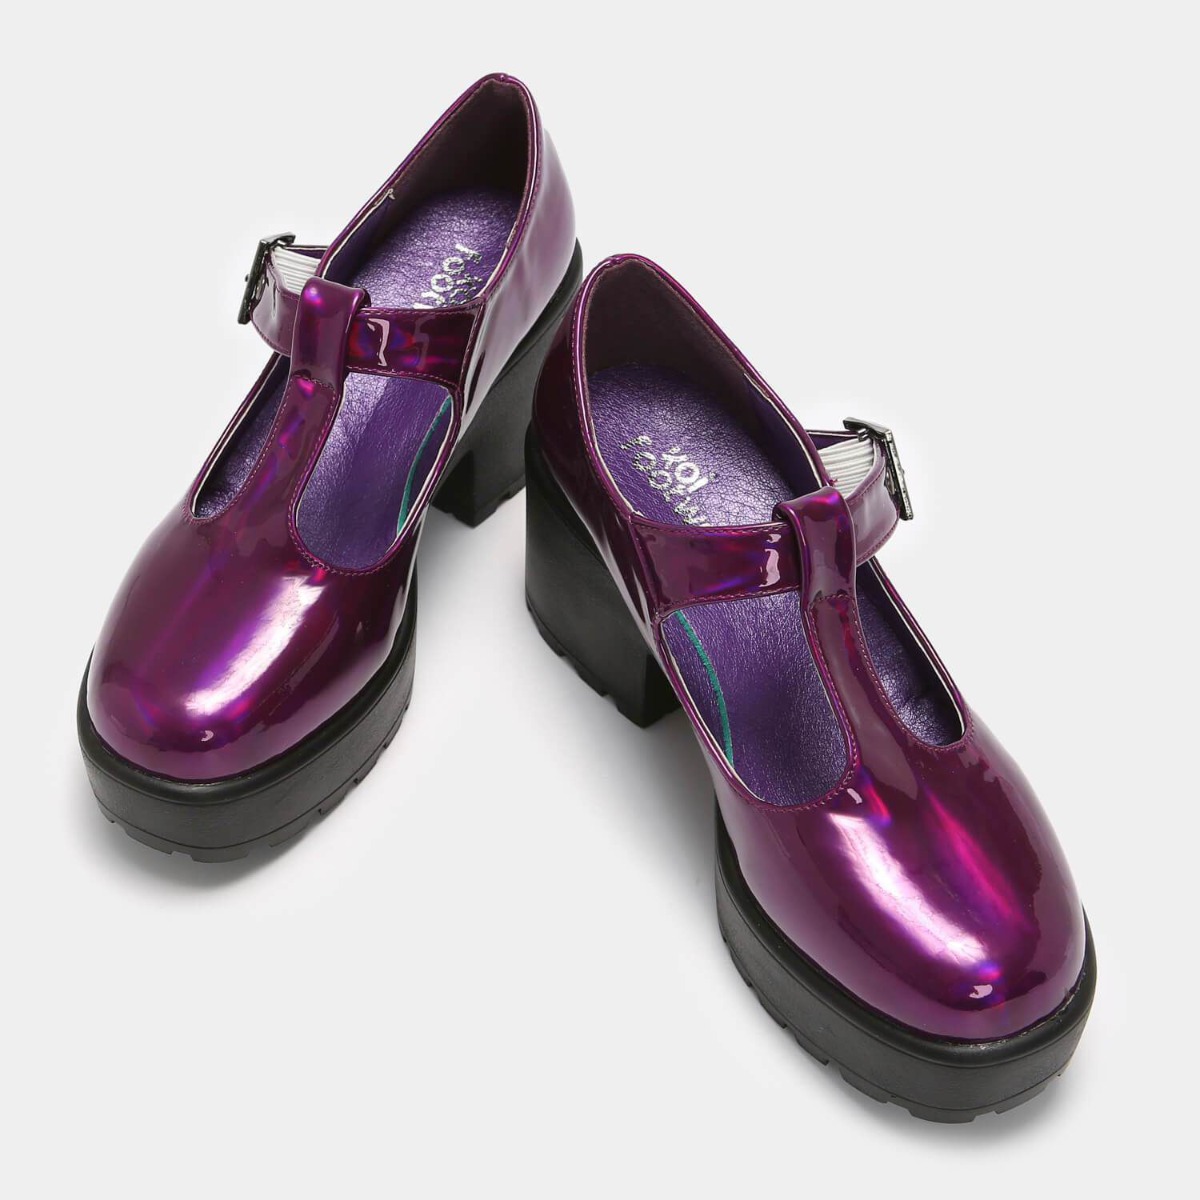 kfnd35purbb_chaussures-mary-janes-lolita-glam-rock-sai-violet-metallique